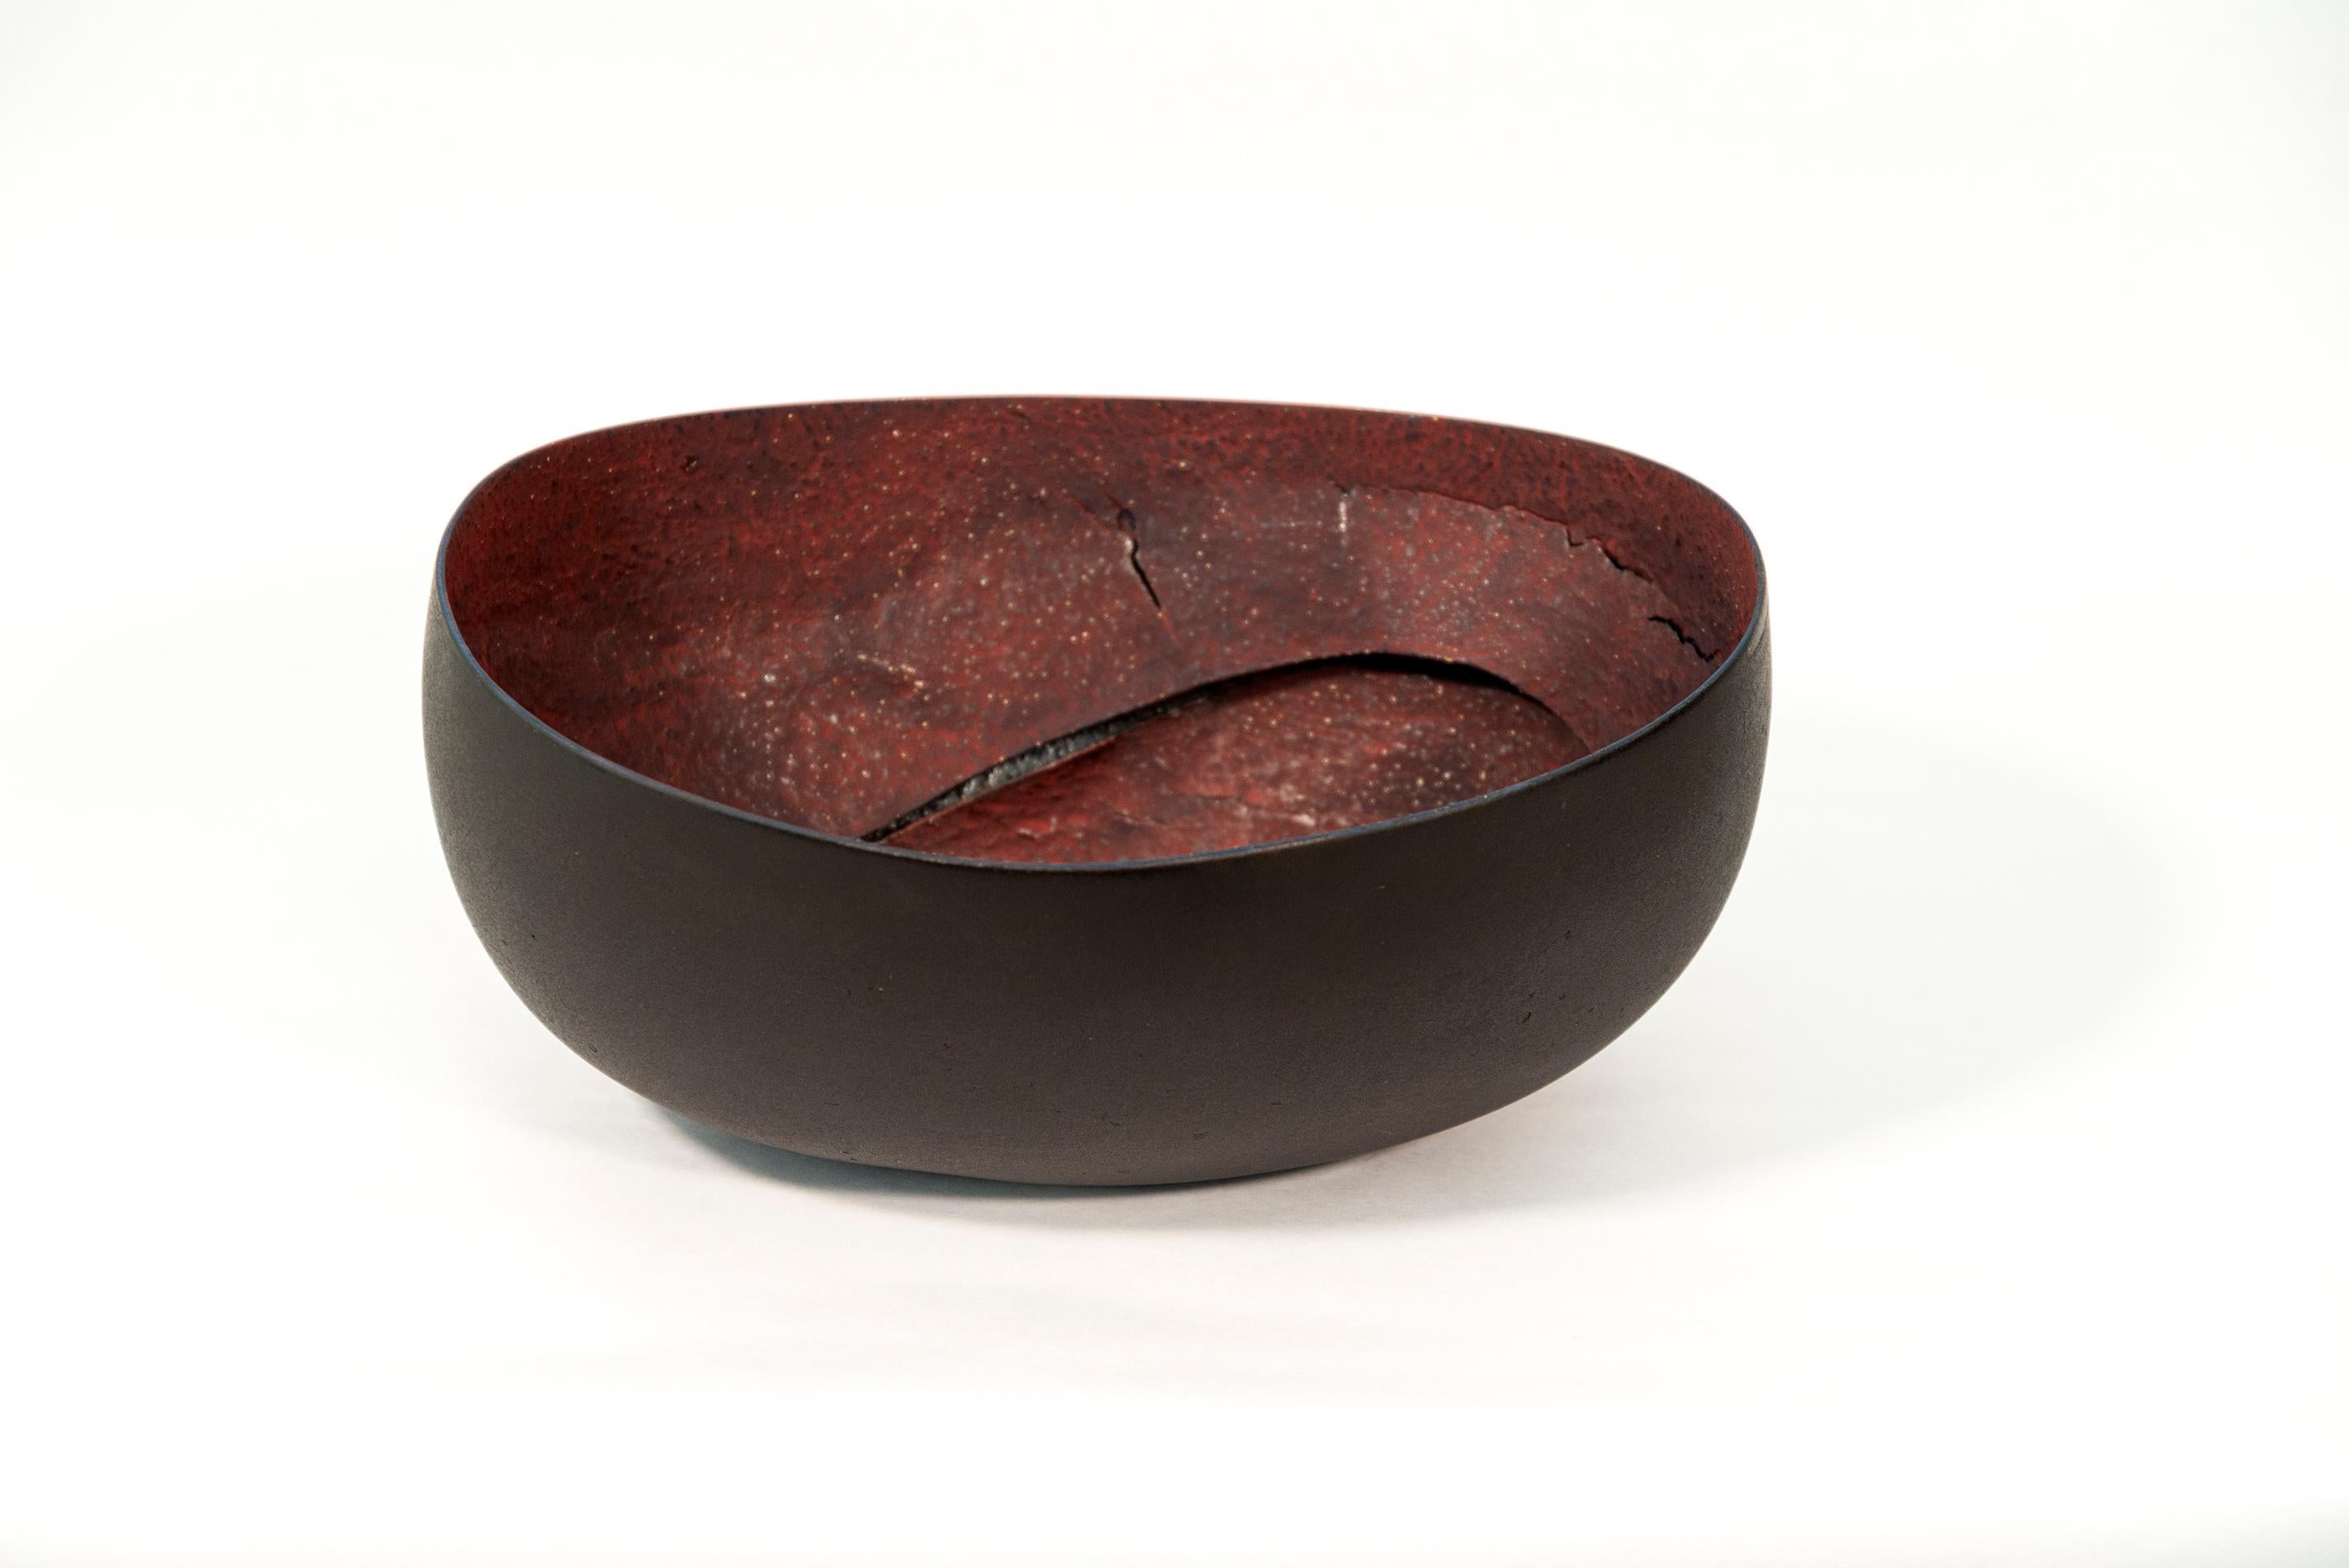 Steven Heinemann Abstract Sculpture - Untitled Bowl (Black) - black, red, nature inspired, textured, ceramic vessel